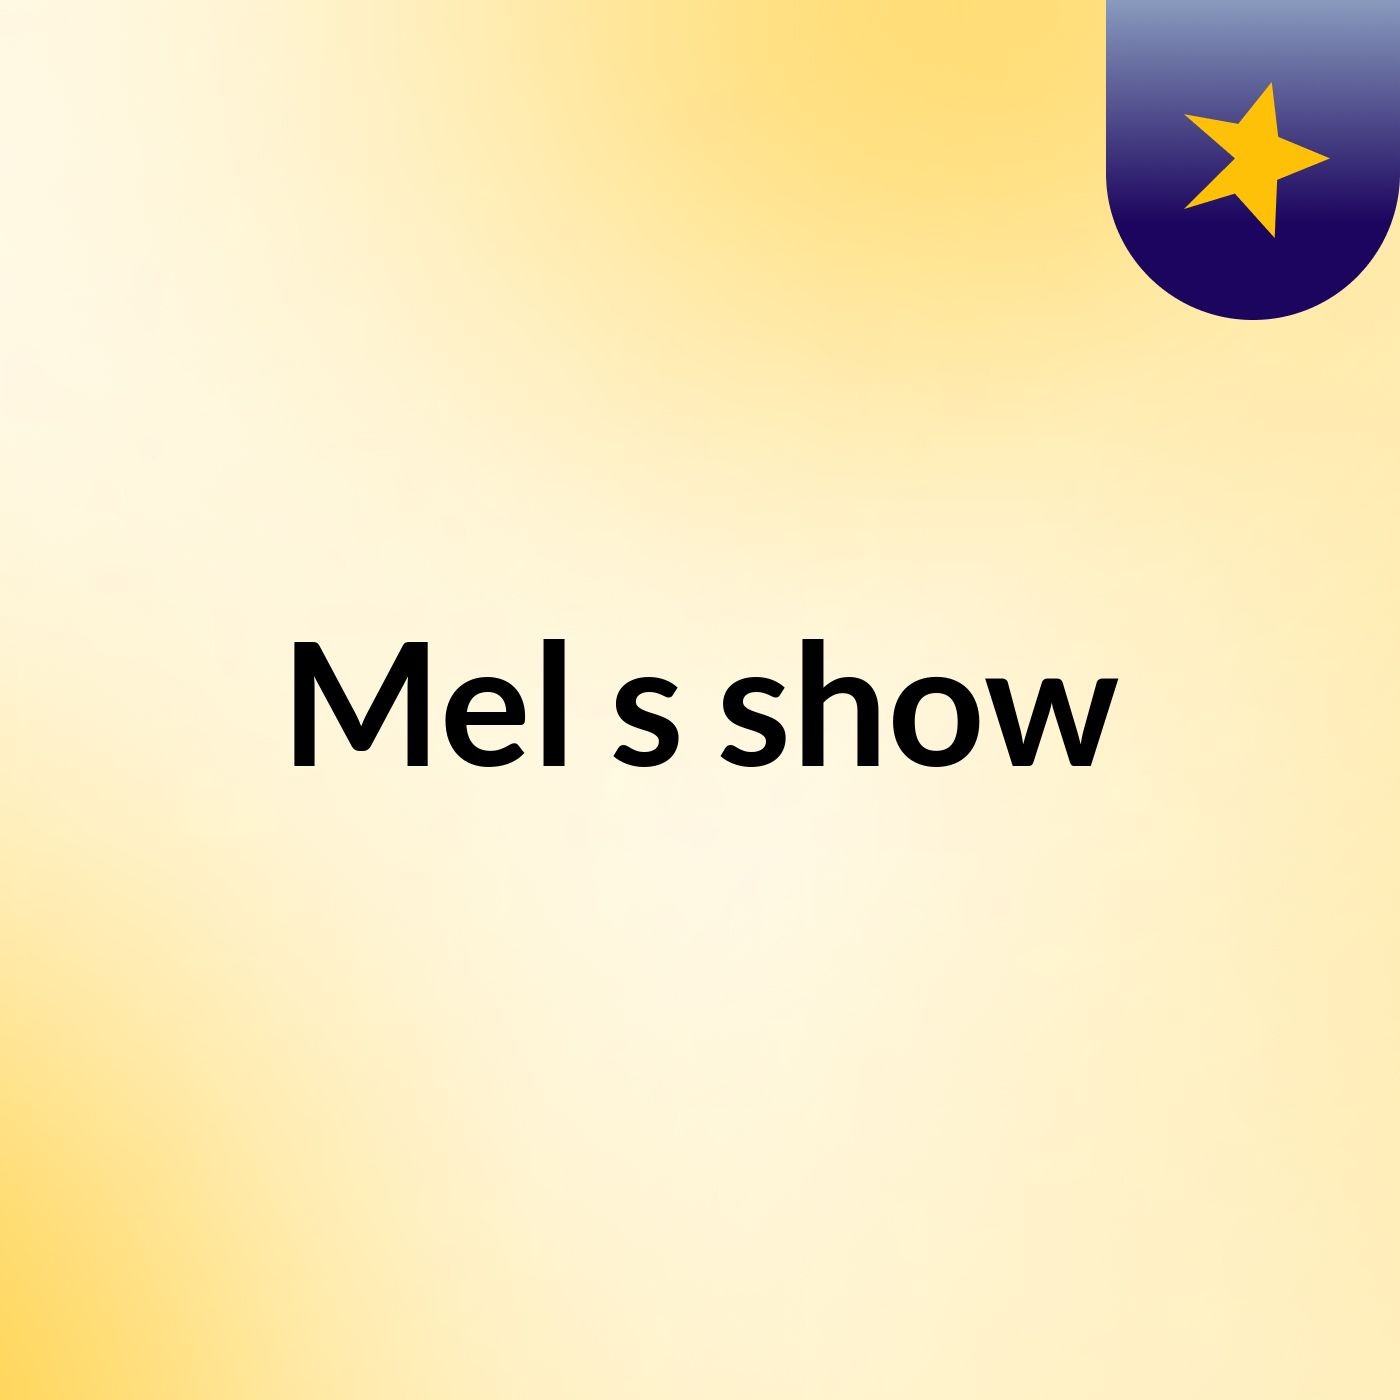 Mel's show